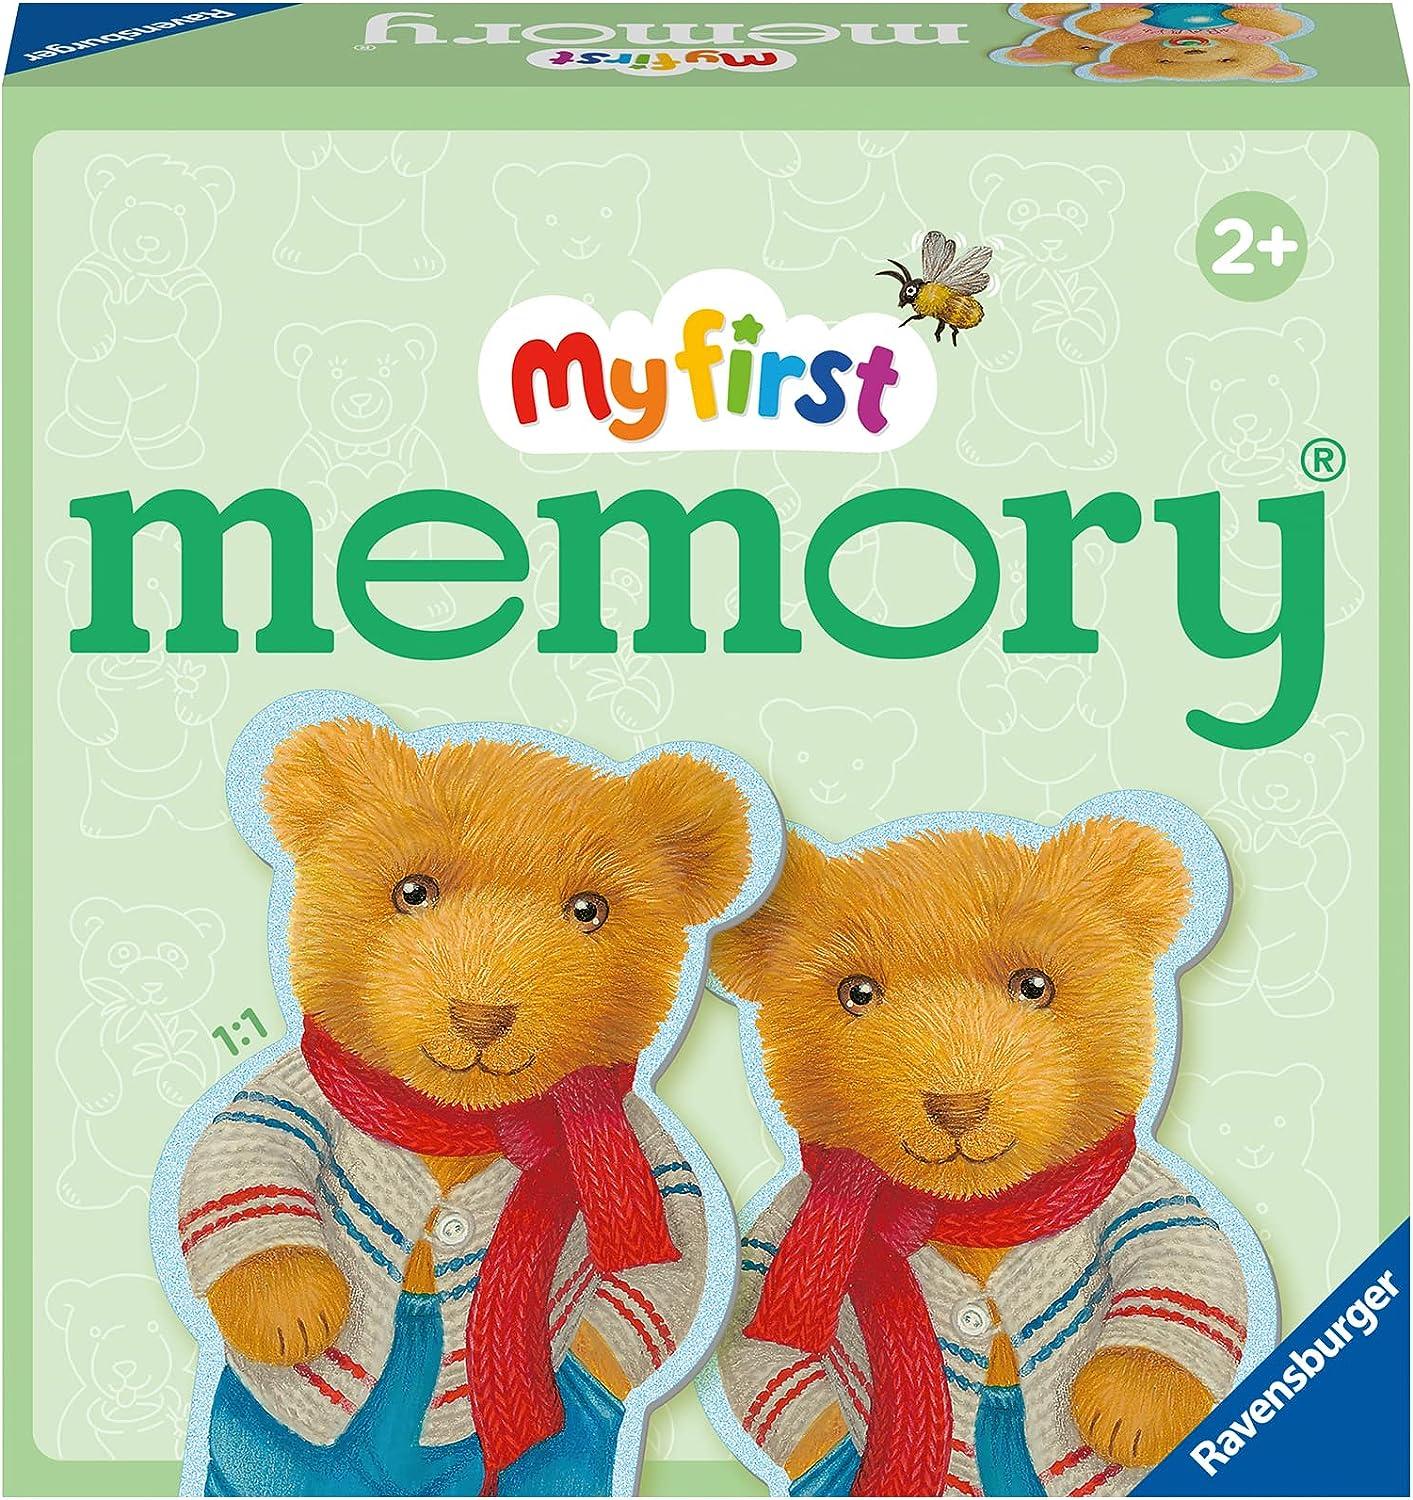 My first memory - Teddys